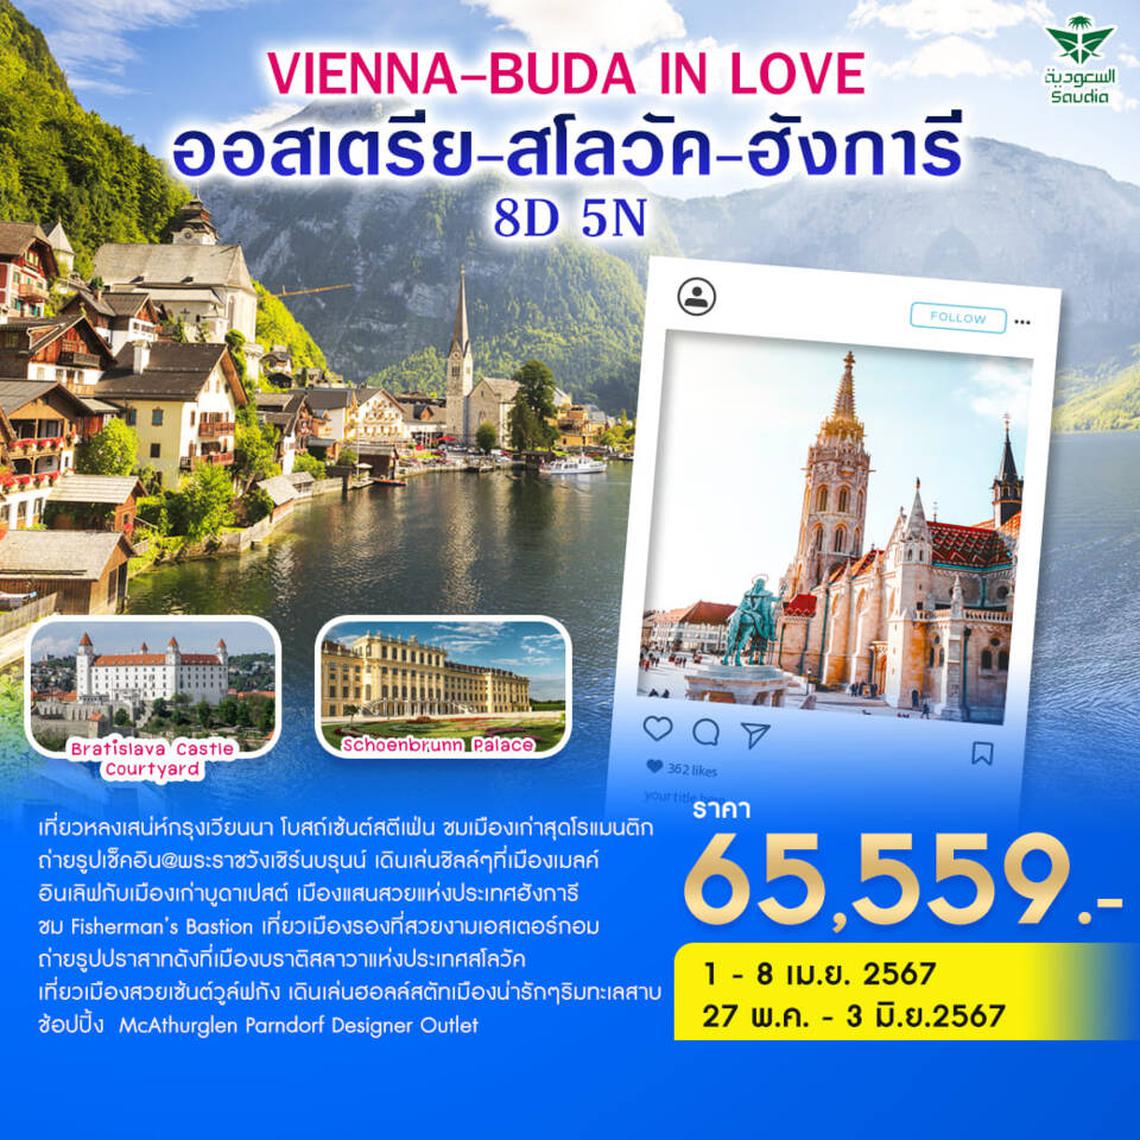 VIEBUDA-SV VIENNA-BUDA IN LOVE 8D5N BY SV